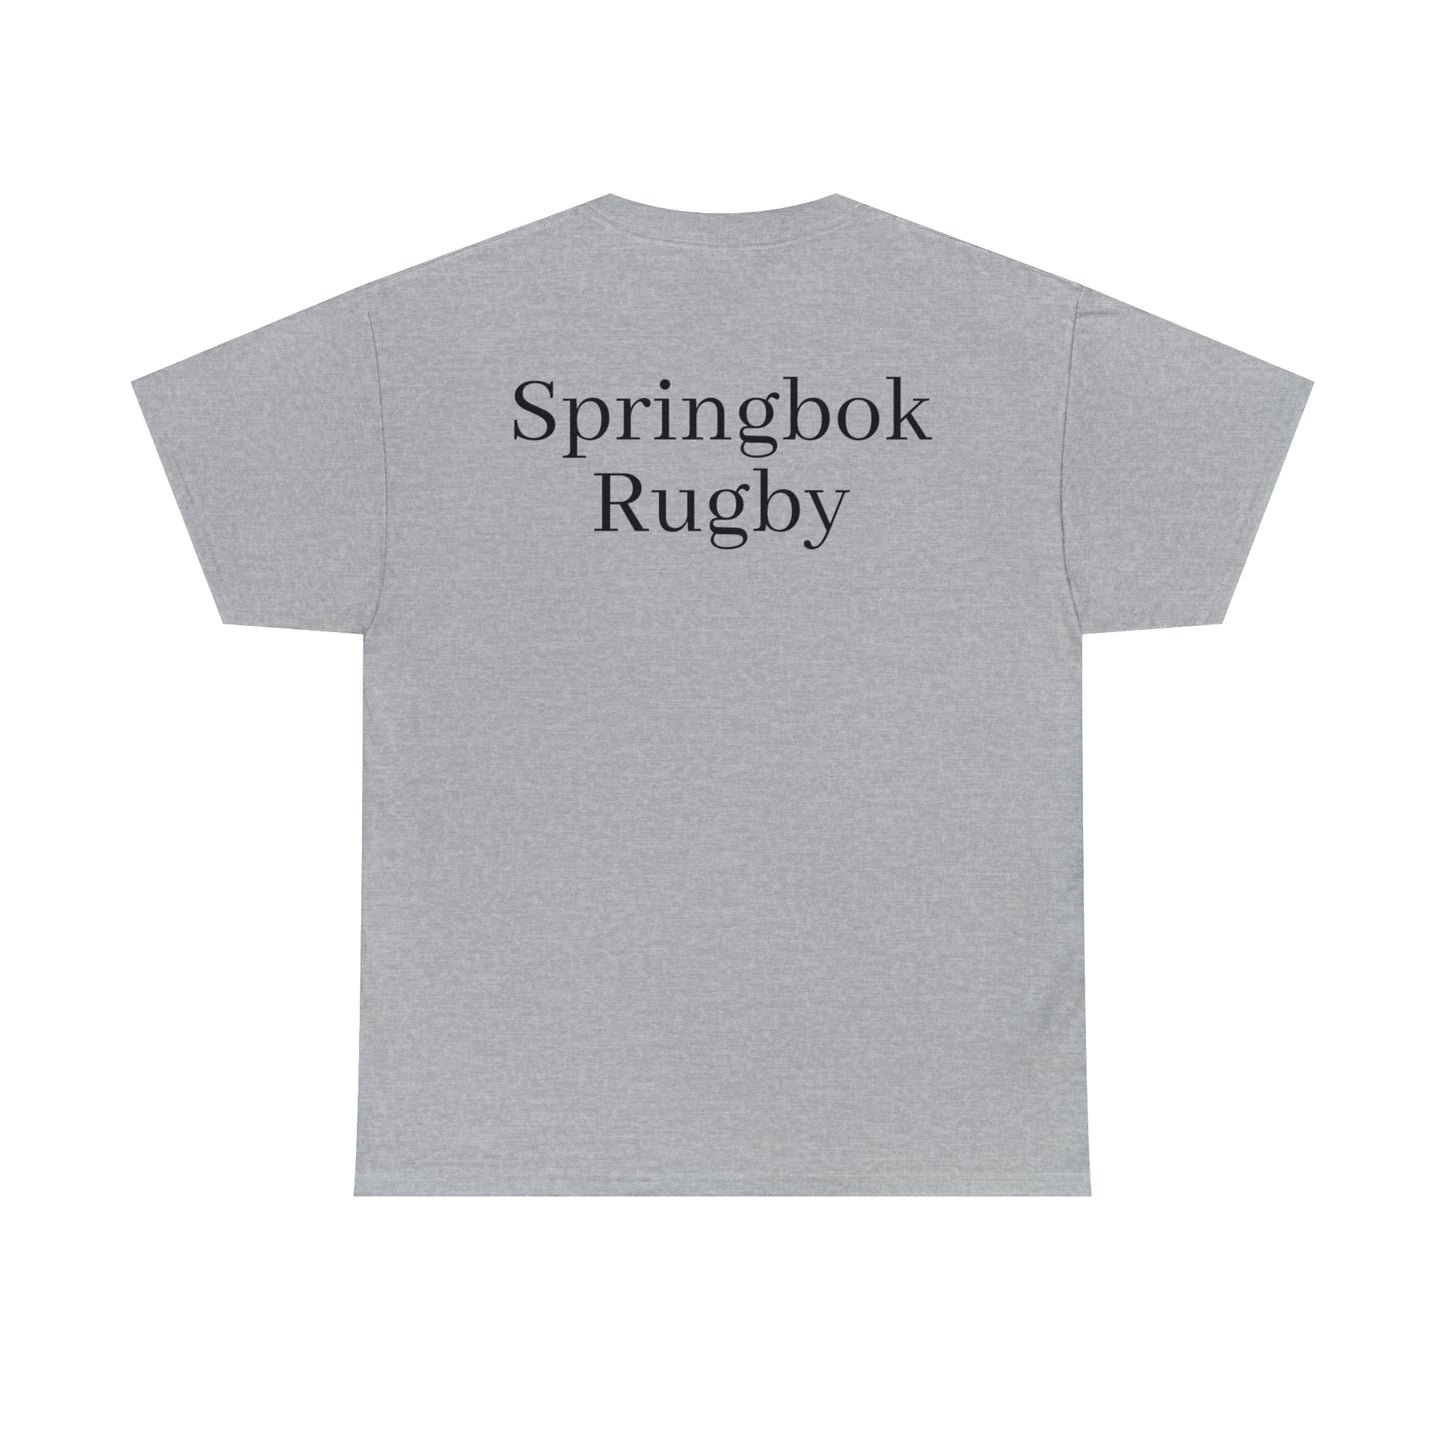 Springboks Celebrating with RWC - light shirts